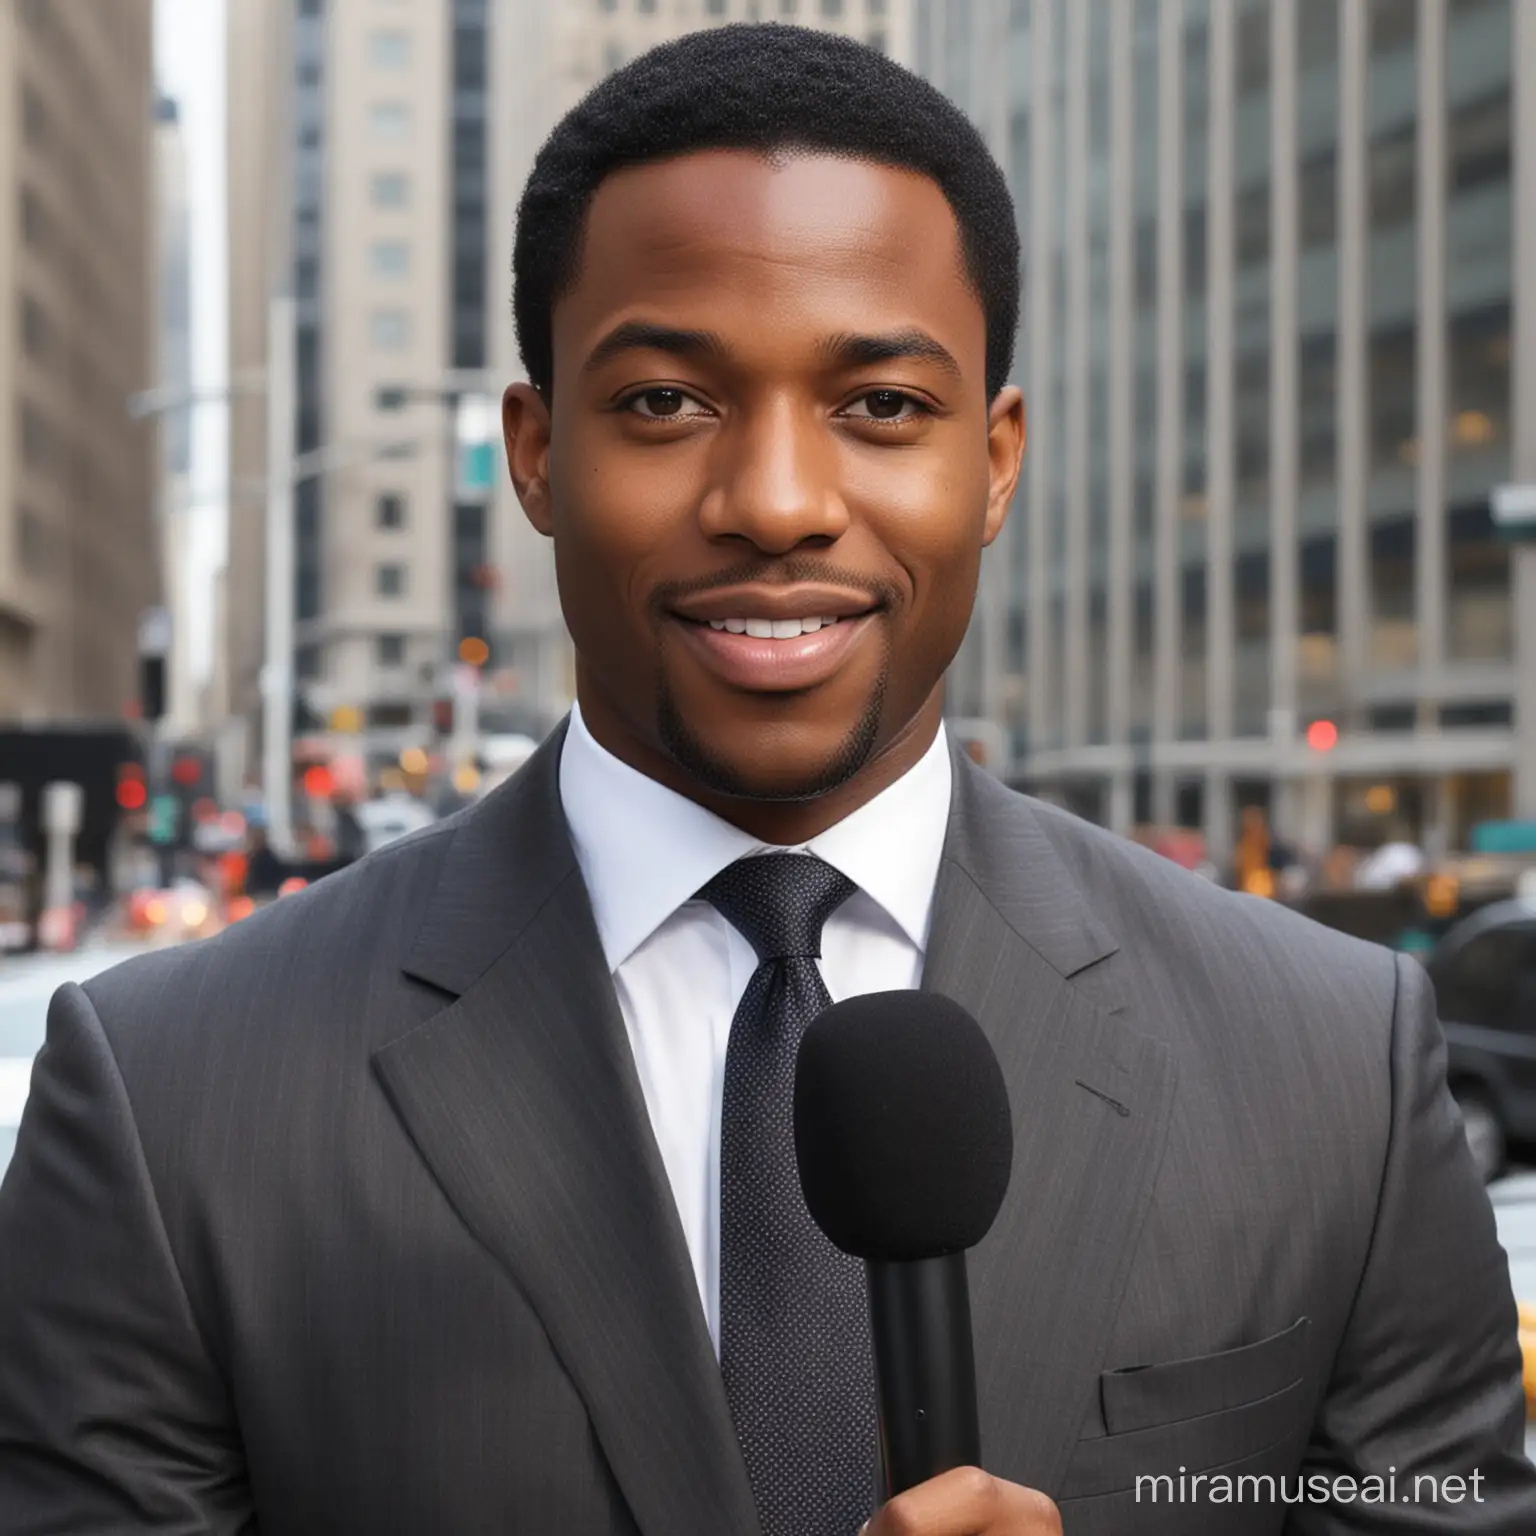 Black male news reporter